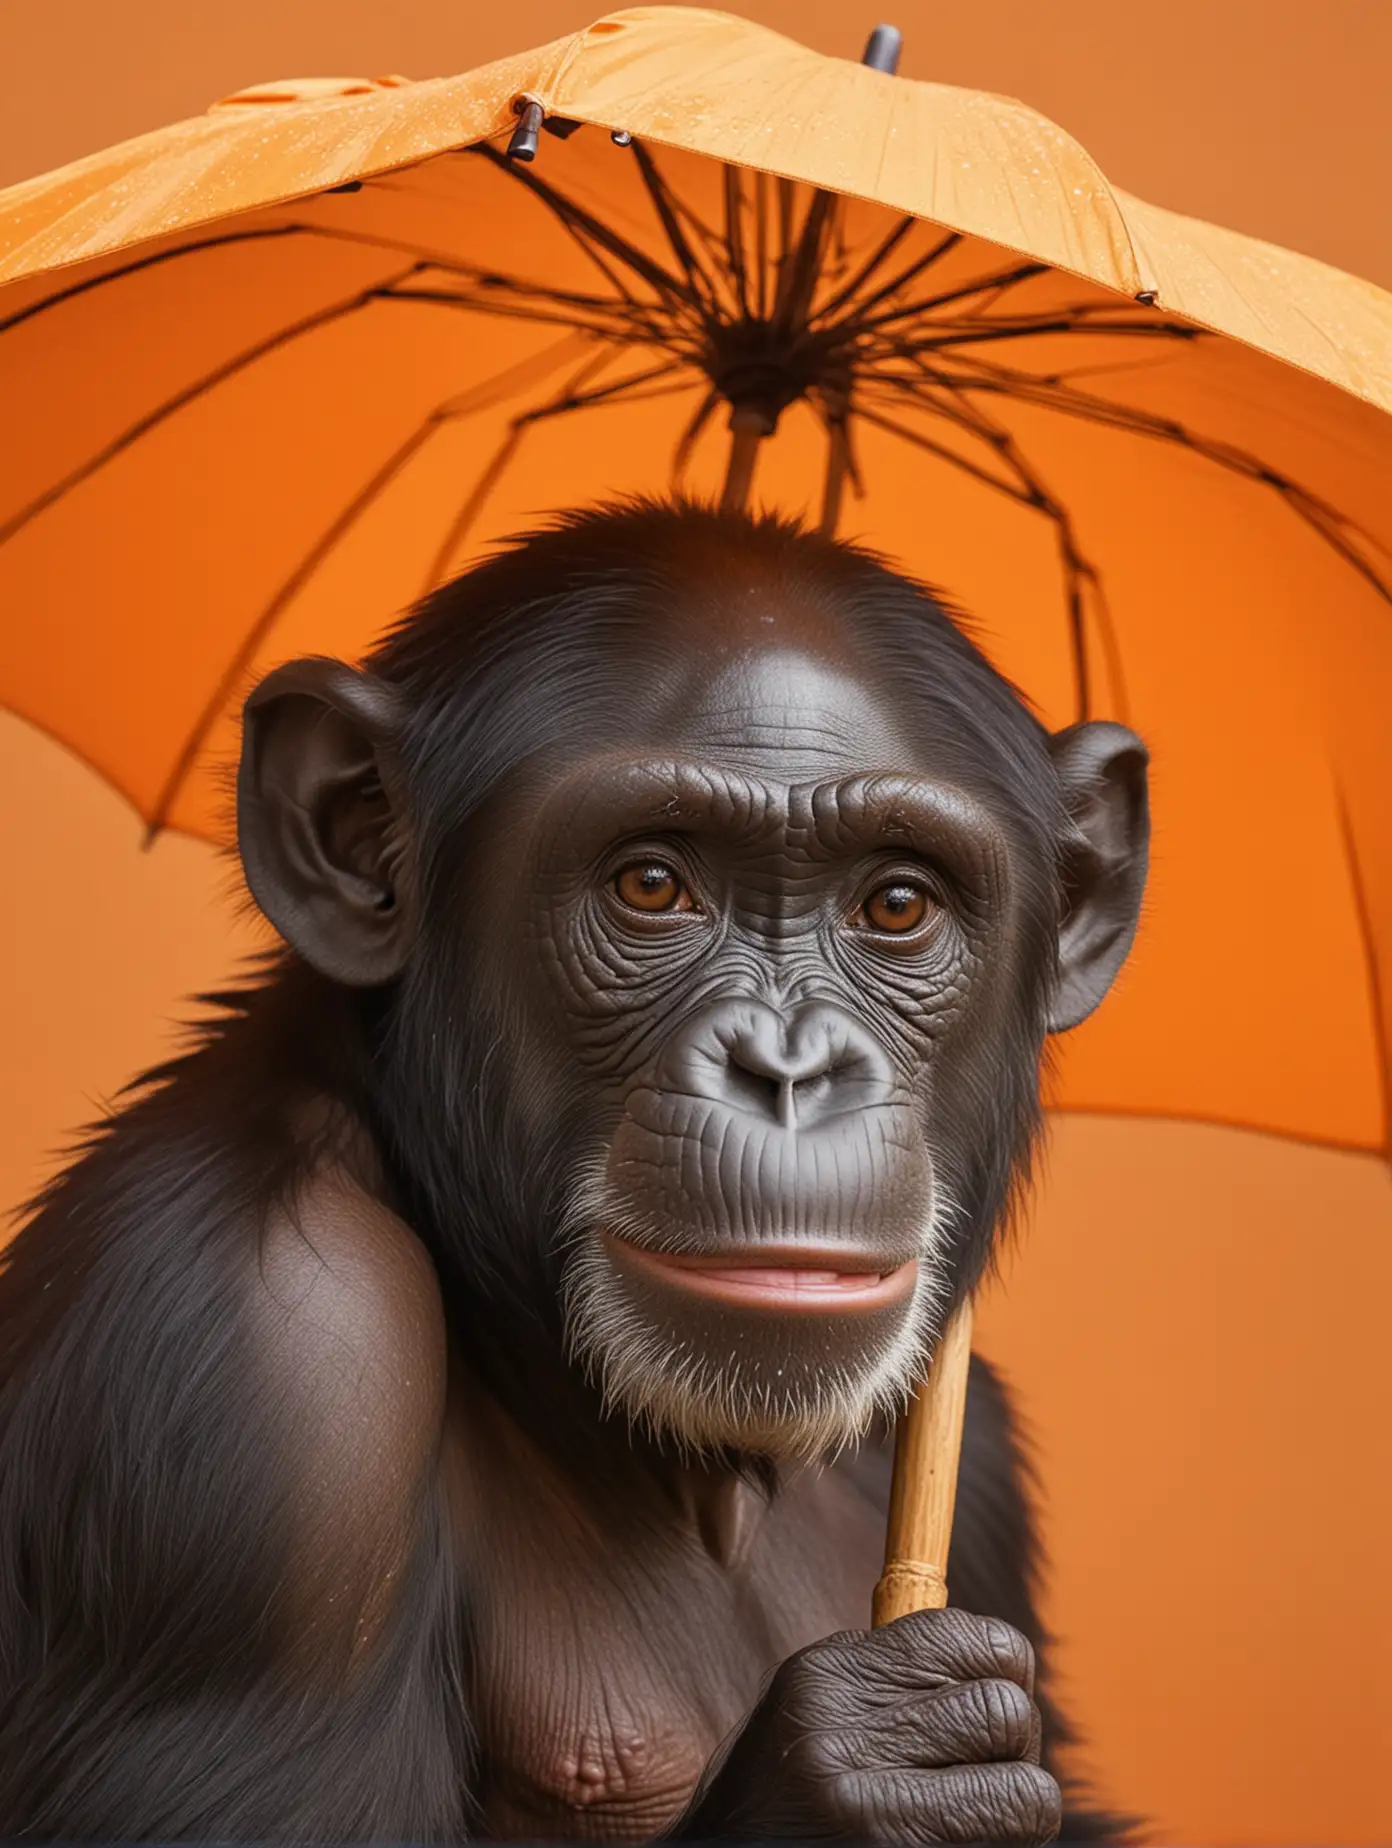 poster of photograph of chimpanzee holding umbrella orange background